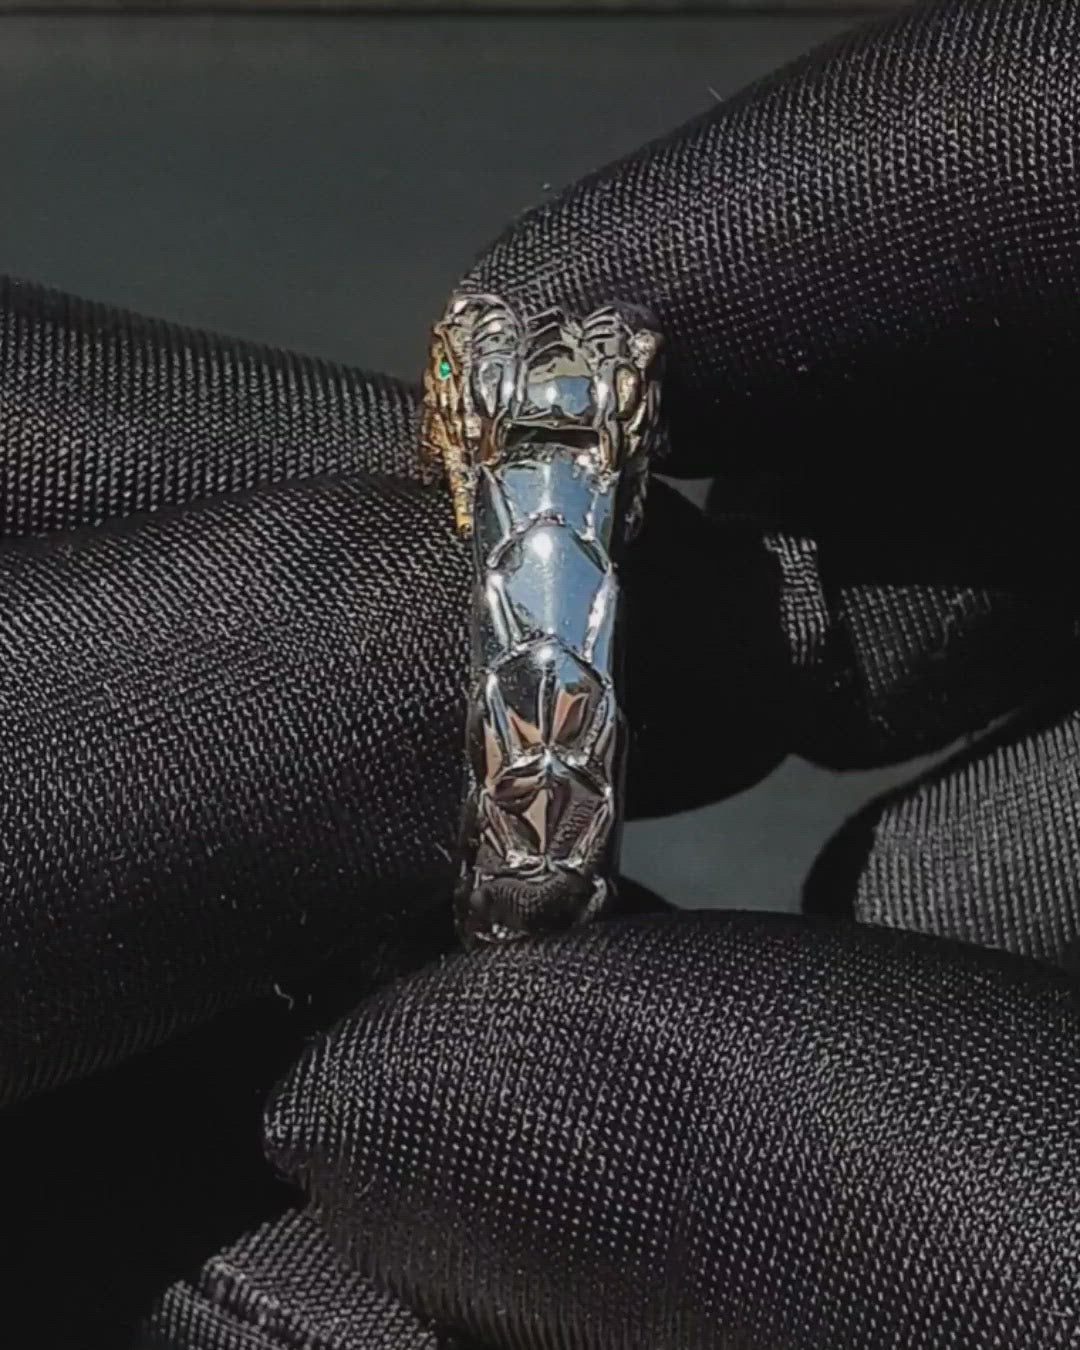 Ouroboros Dragon Ring